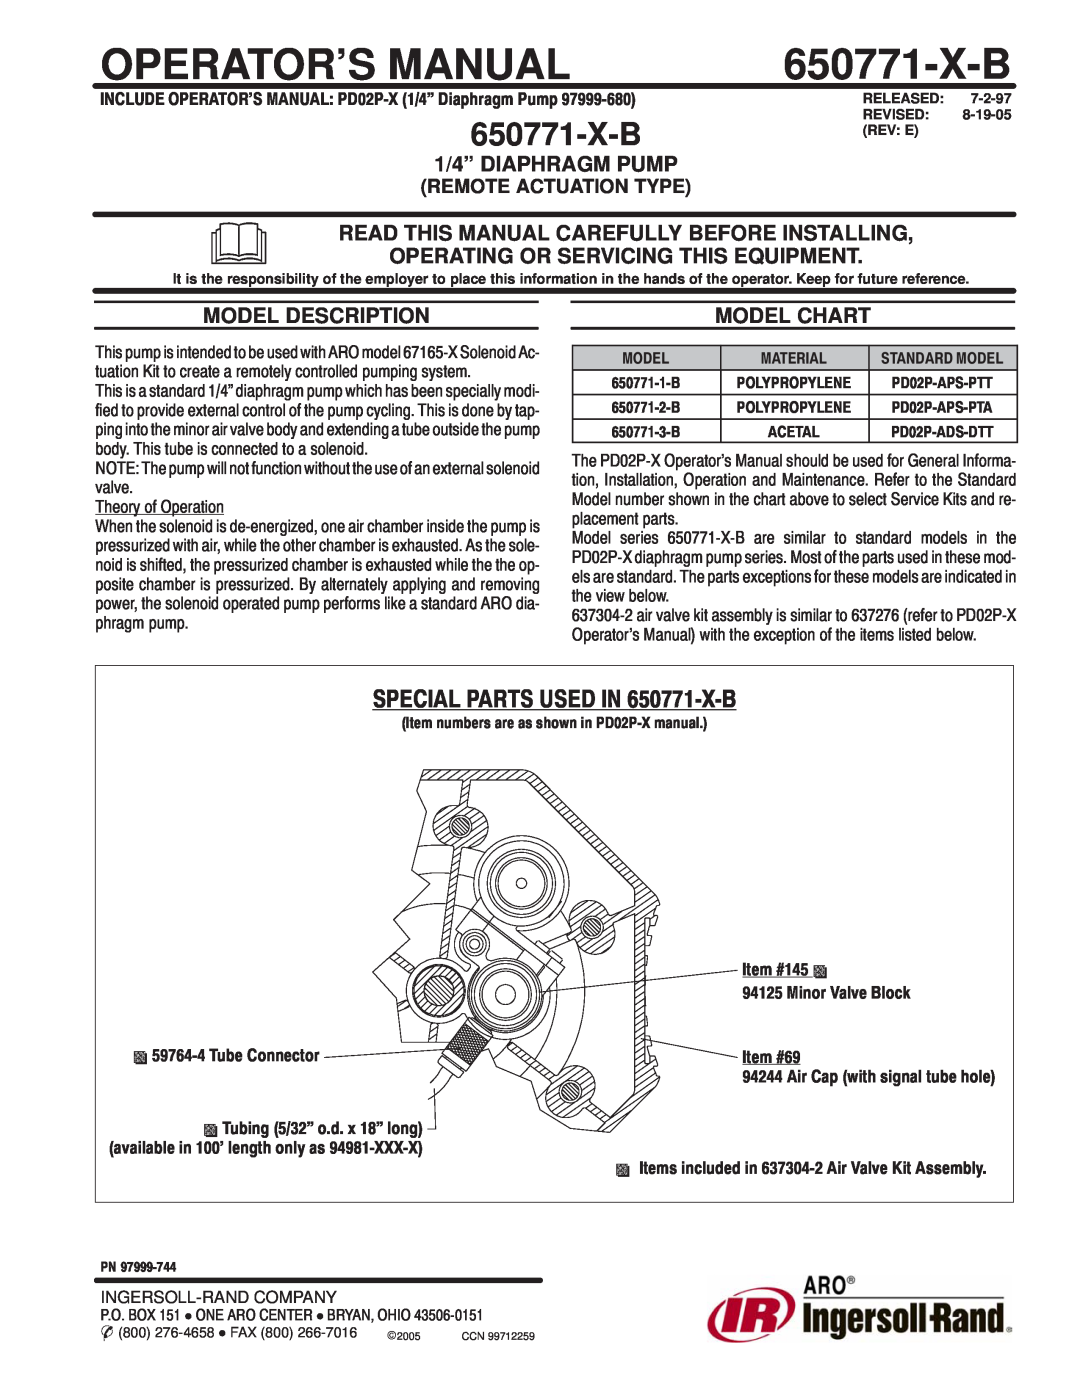 Ingersoll-Rand 6507713B manual Operator’S Manual, 650771-X-B, 1/4” DIAPHRAGM PUMP, Operating Or Servicing This Equipment 